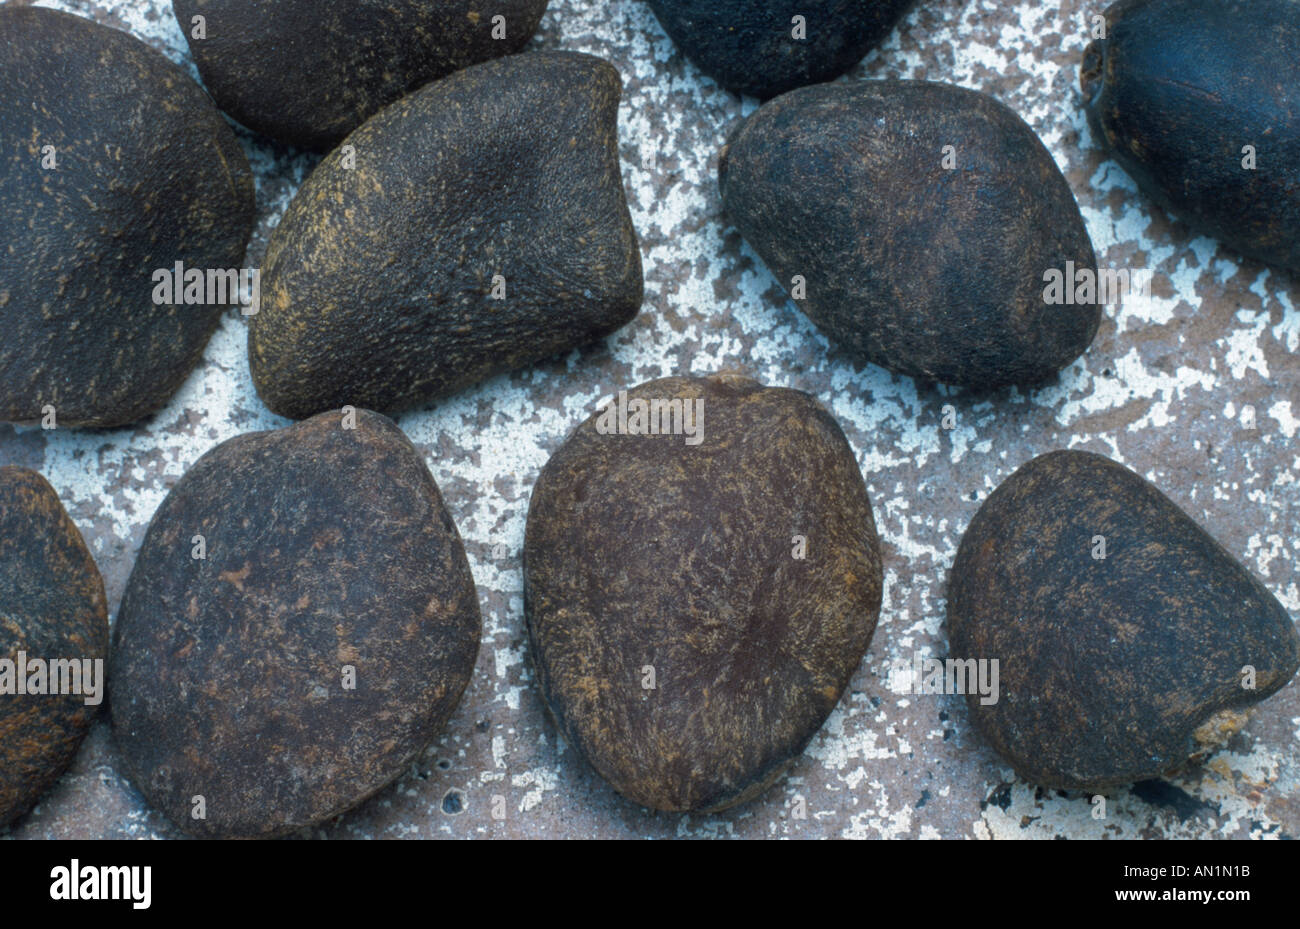 ignatius bean, curare (Strychnos amara, Strychnos ignatii, Strychnos toxifera), seeds Stock Photo